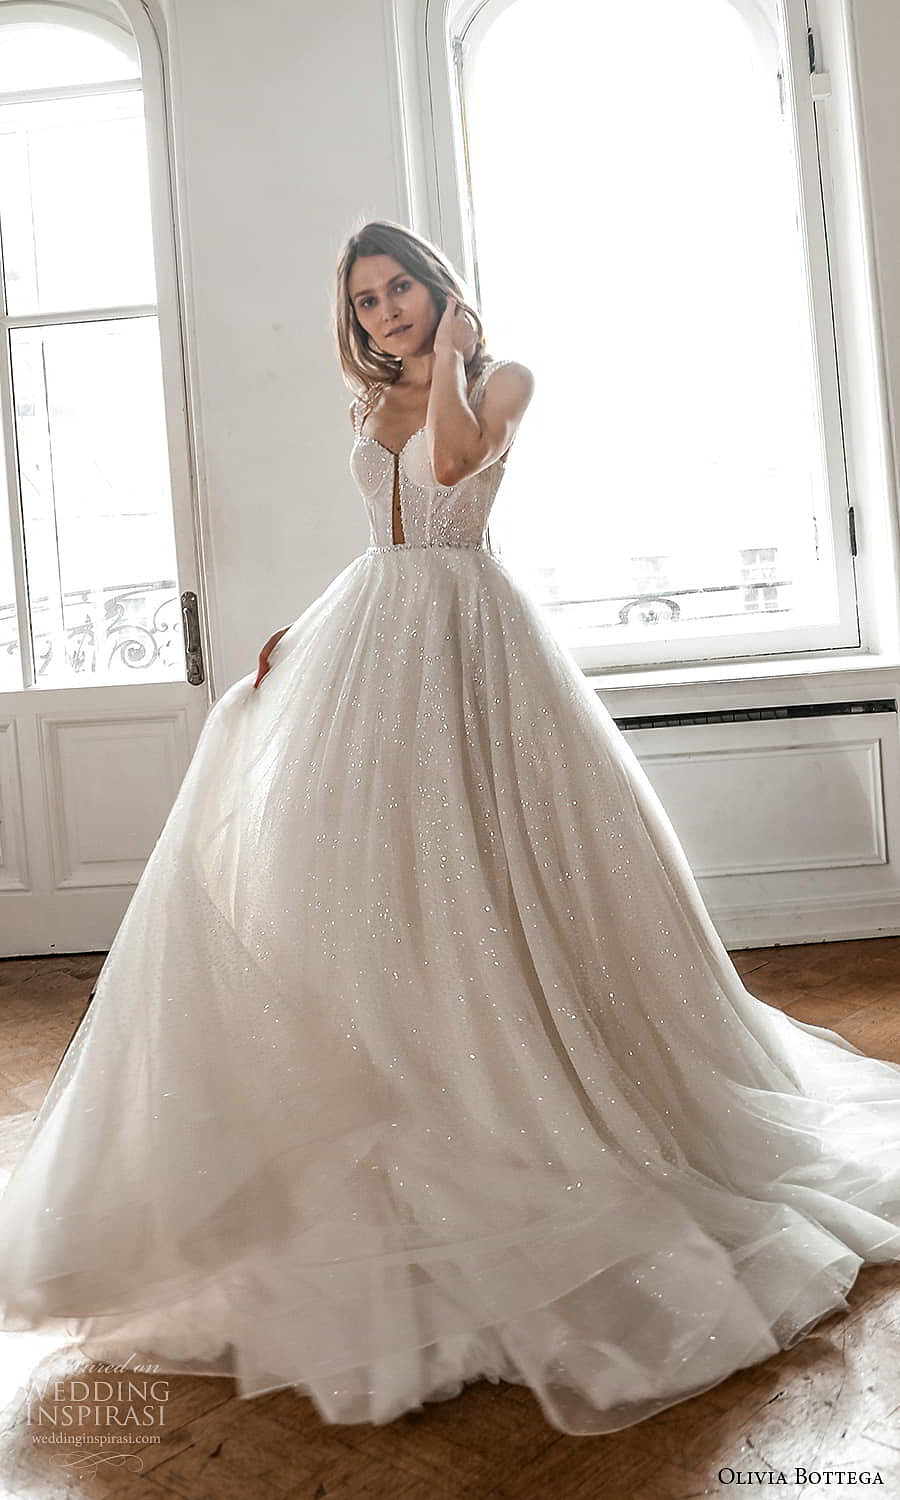 Olivia Bottega Pret-a-Porter 新娘系列 优雅百搭新娘嫁衣 - 33